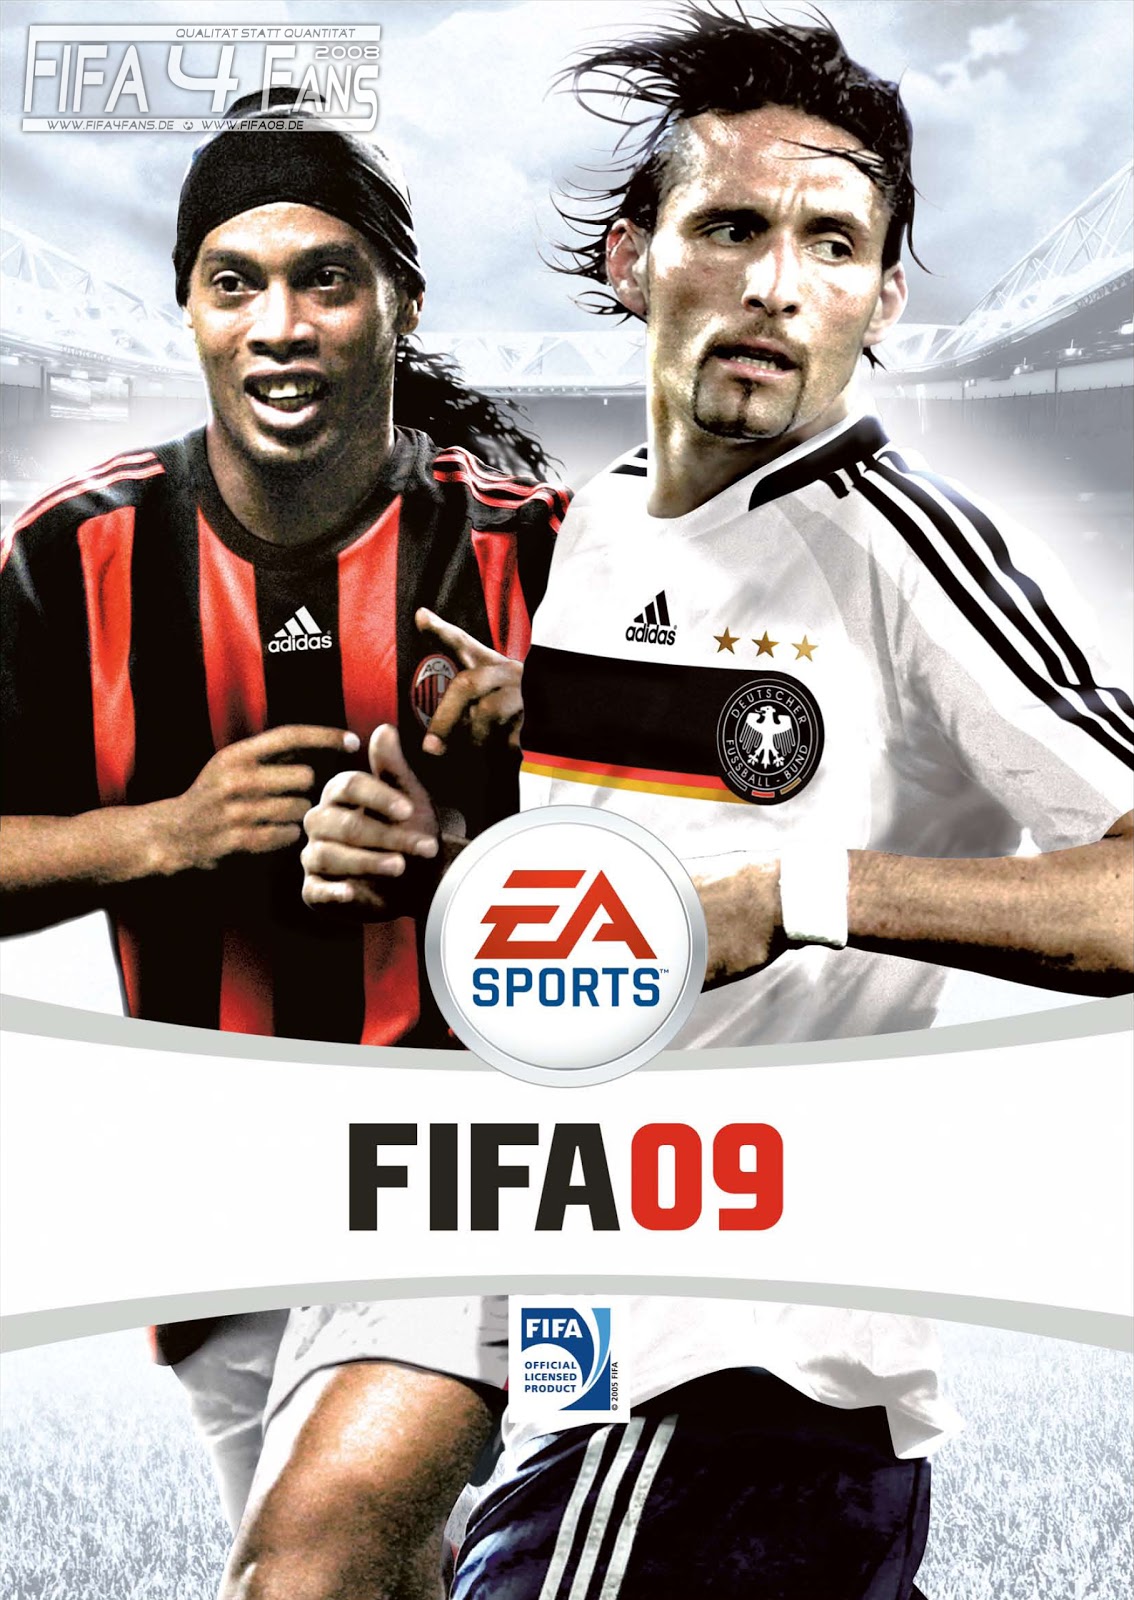 Games Download: FIFA 09 - Download